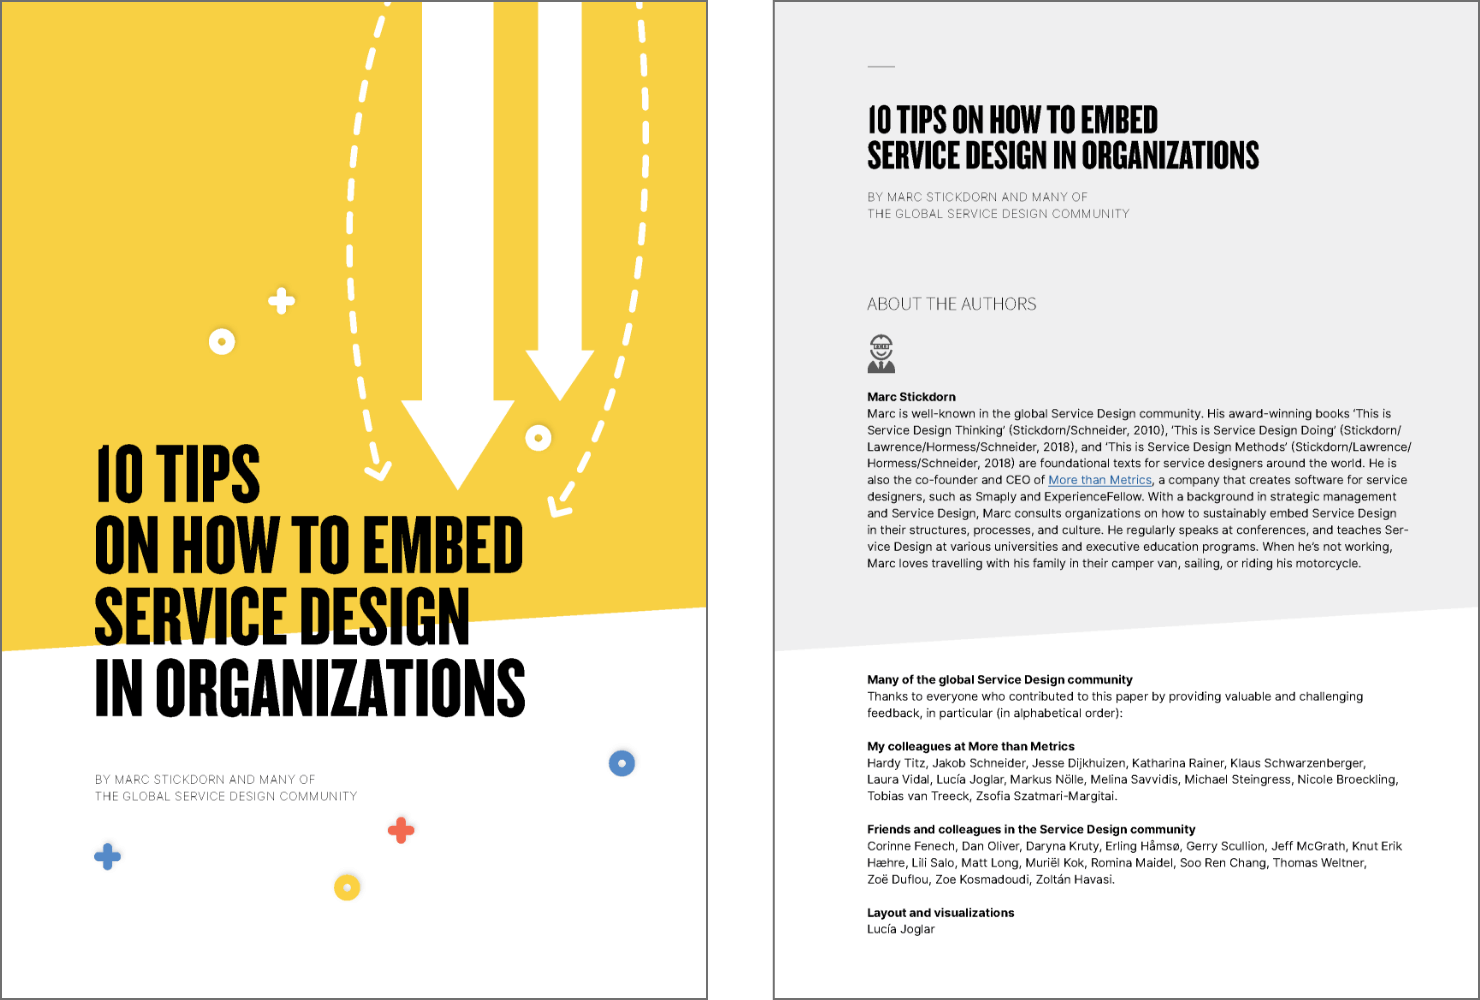 Marc Stickdorn氏のホワイトペーパー「10 TIPS ON HOW TO EMBED SERVICE DESIGN IN ORGANIZATIONS」の表紙と著者紹介ページの画像。